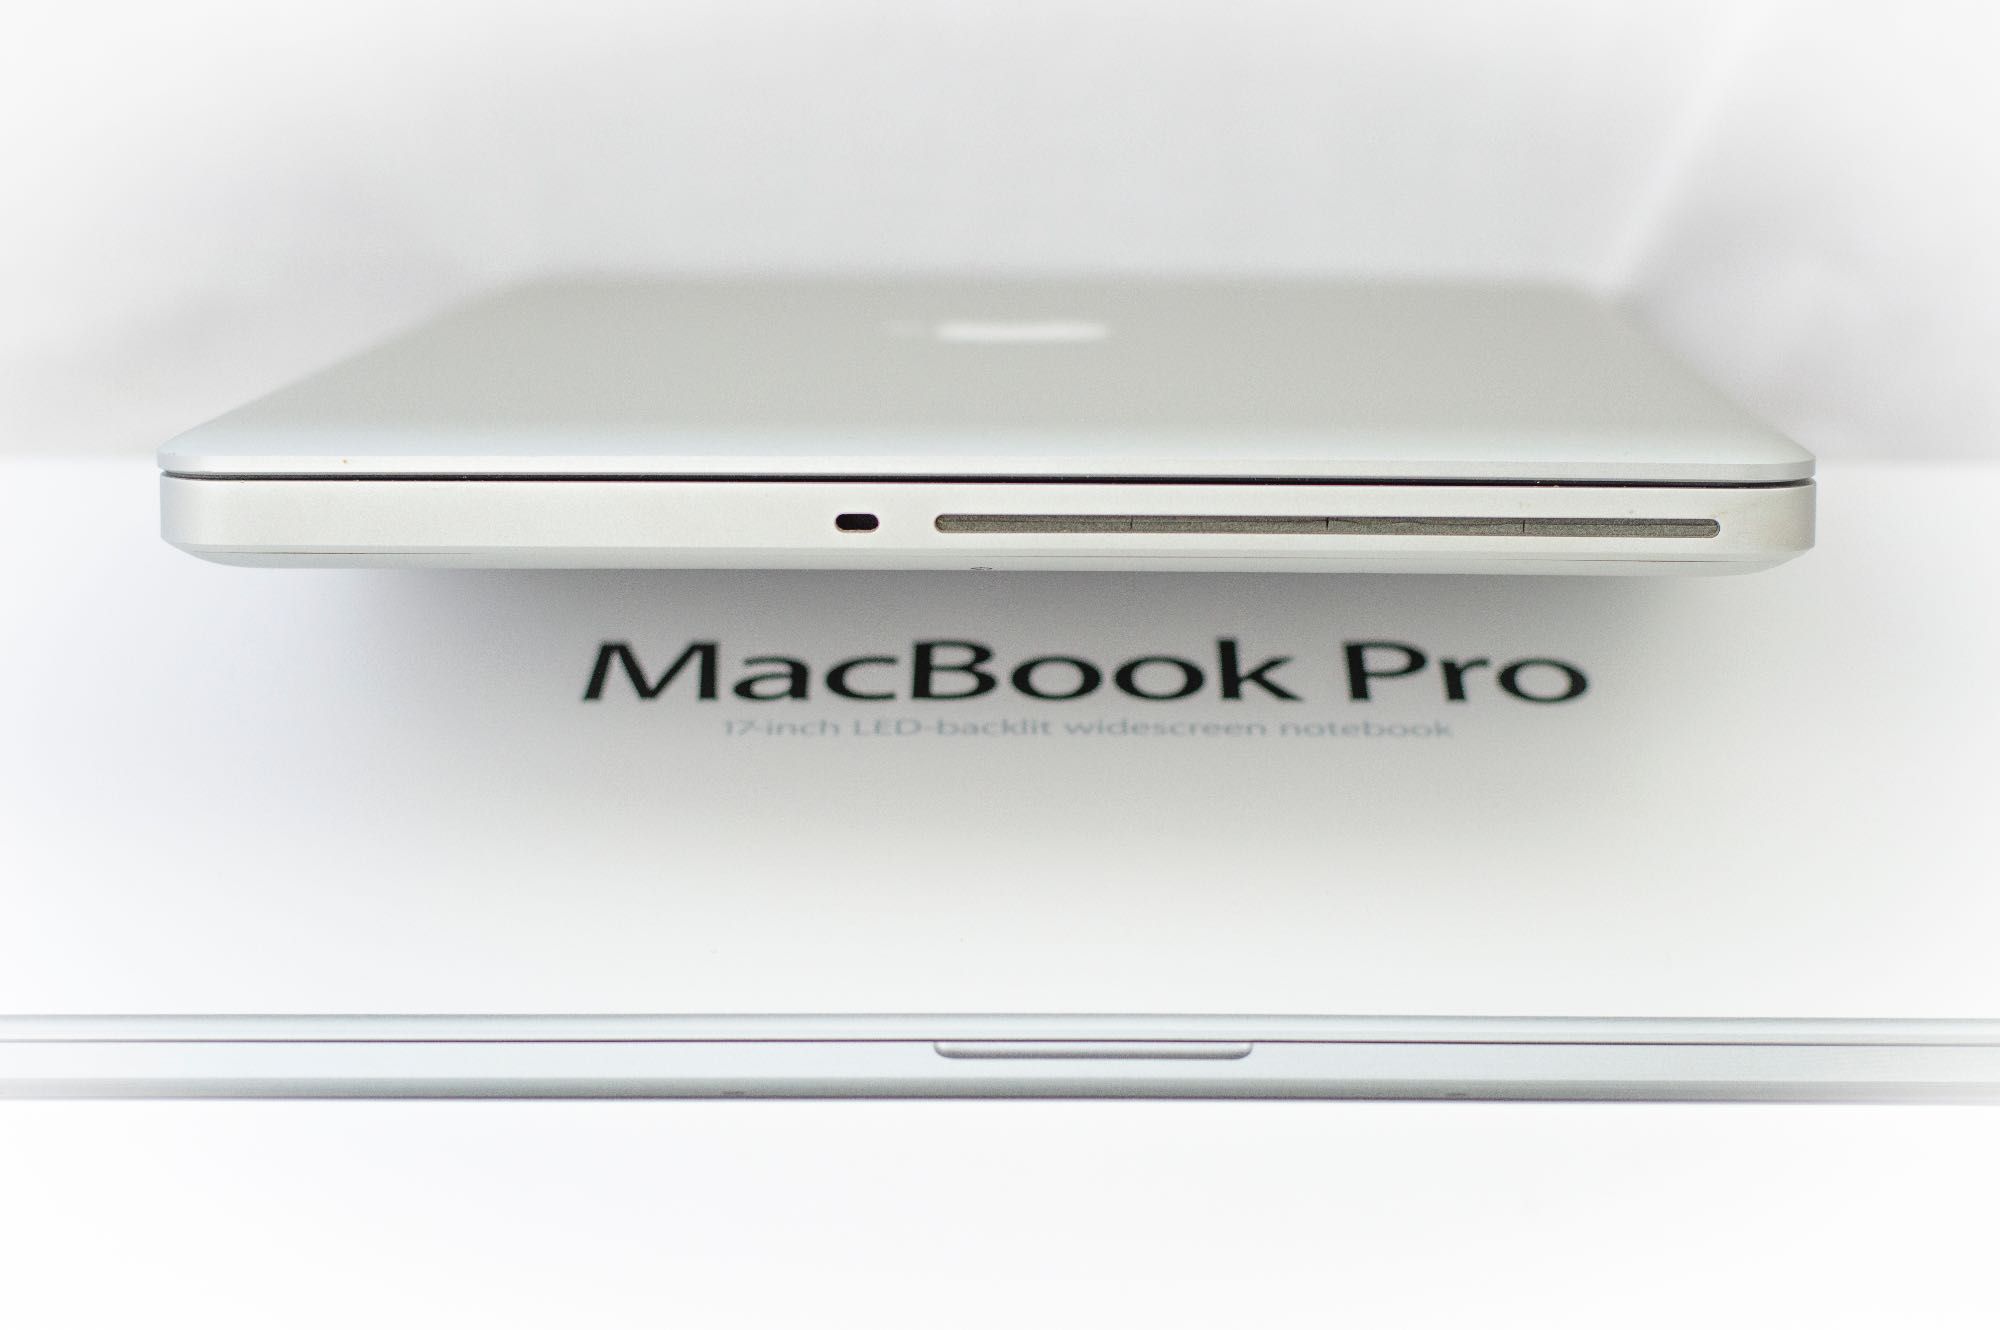 Mac Book Pro (17-inch, Late 2011) kolekcjonerski